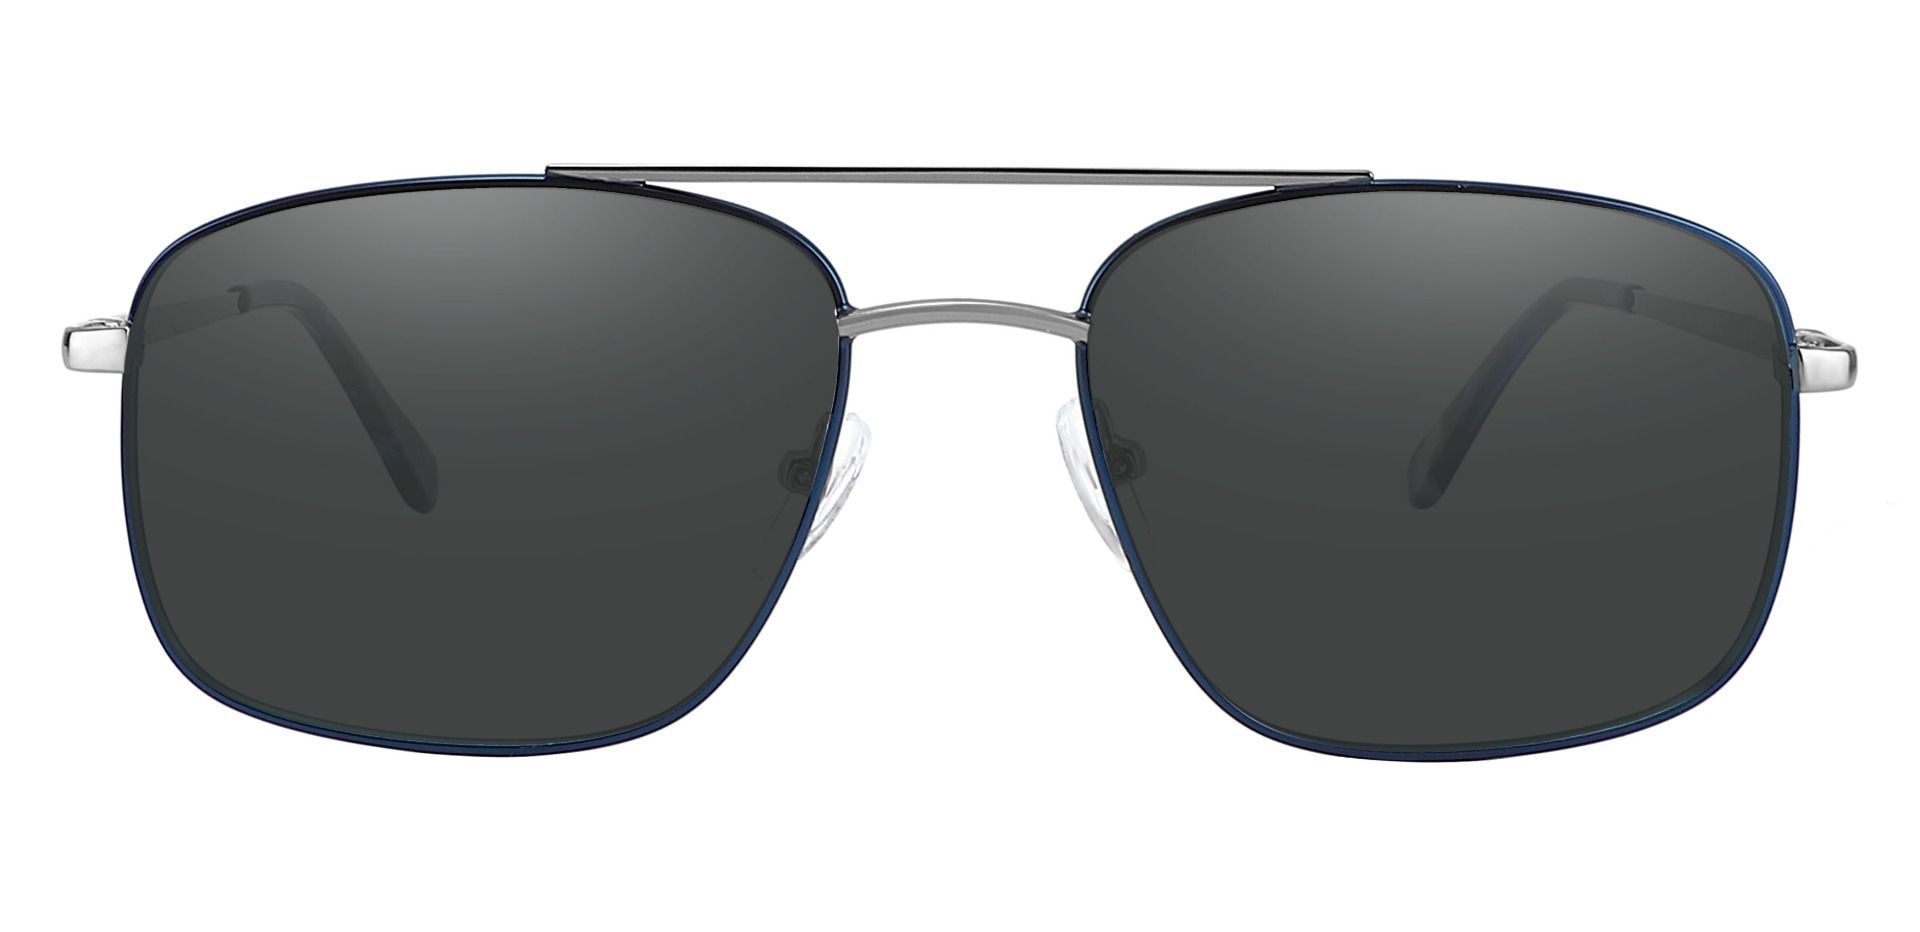 Hiram Aviator Progressive Sunglasses - Blue Frame With Gray Lenses